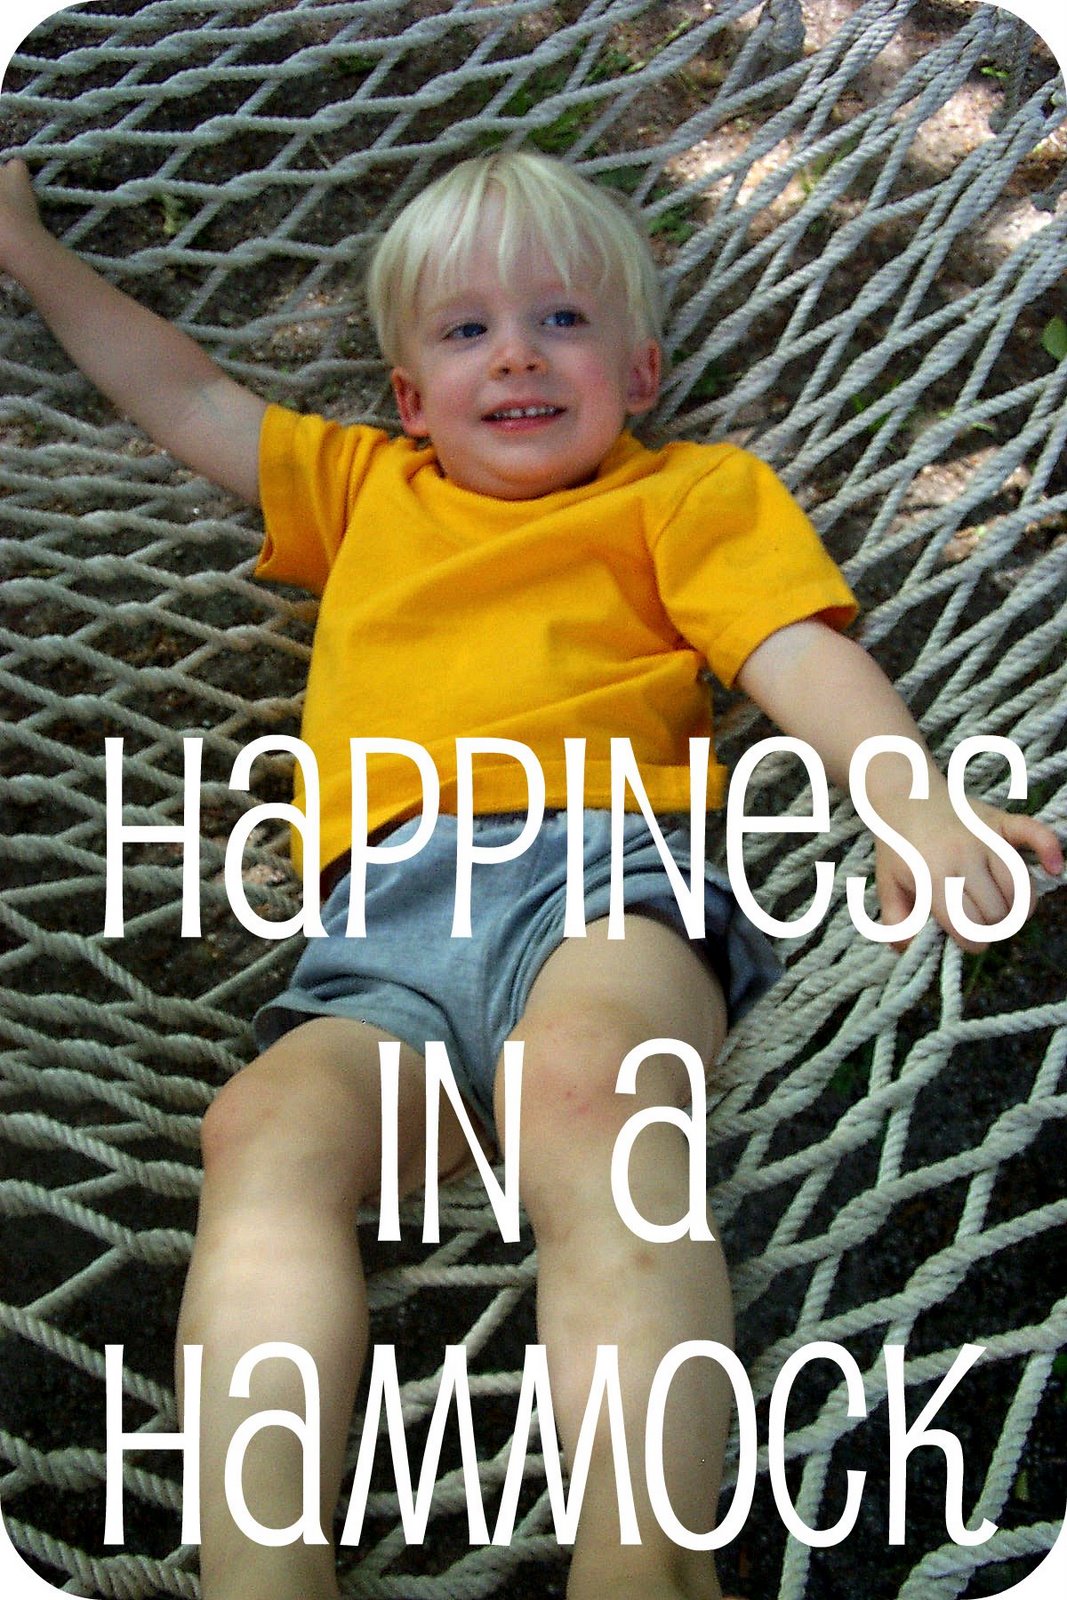 [011happiness+in+a+hammock.jpg]